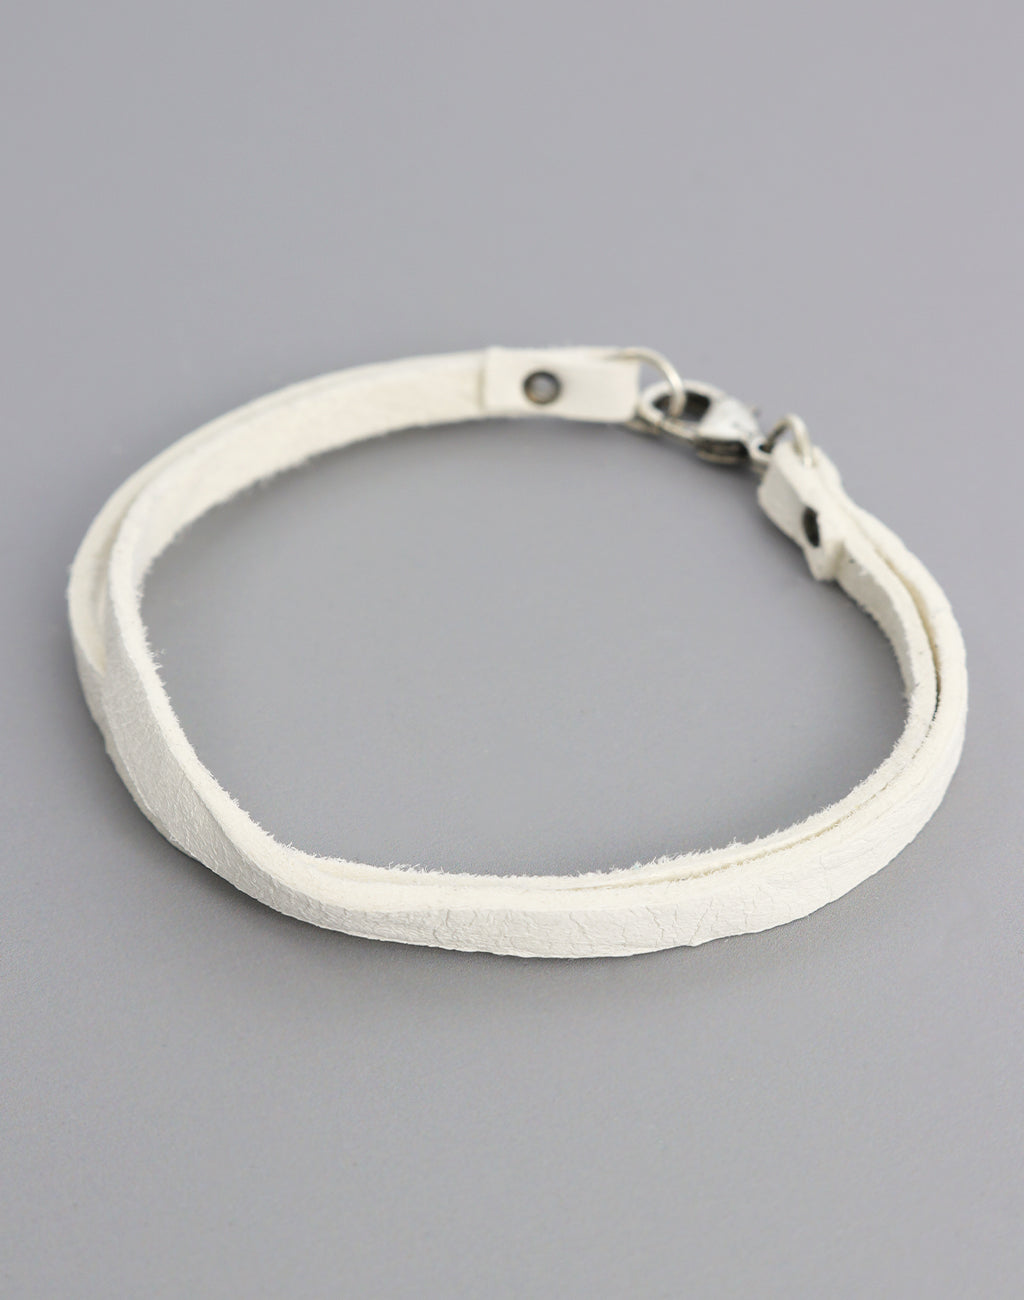 Black Leather Necklace, (1pc)